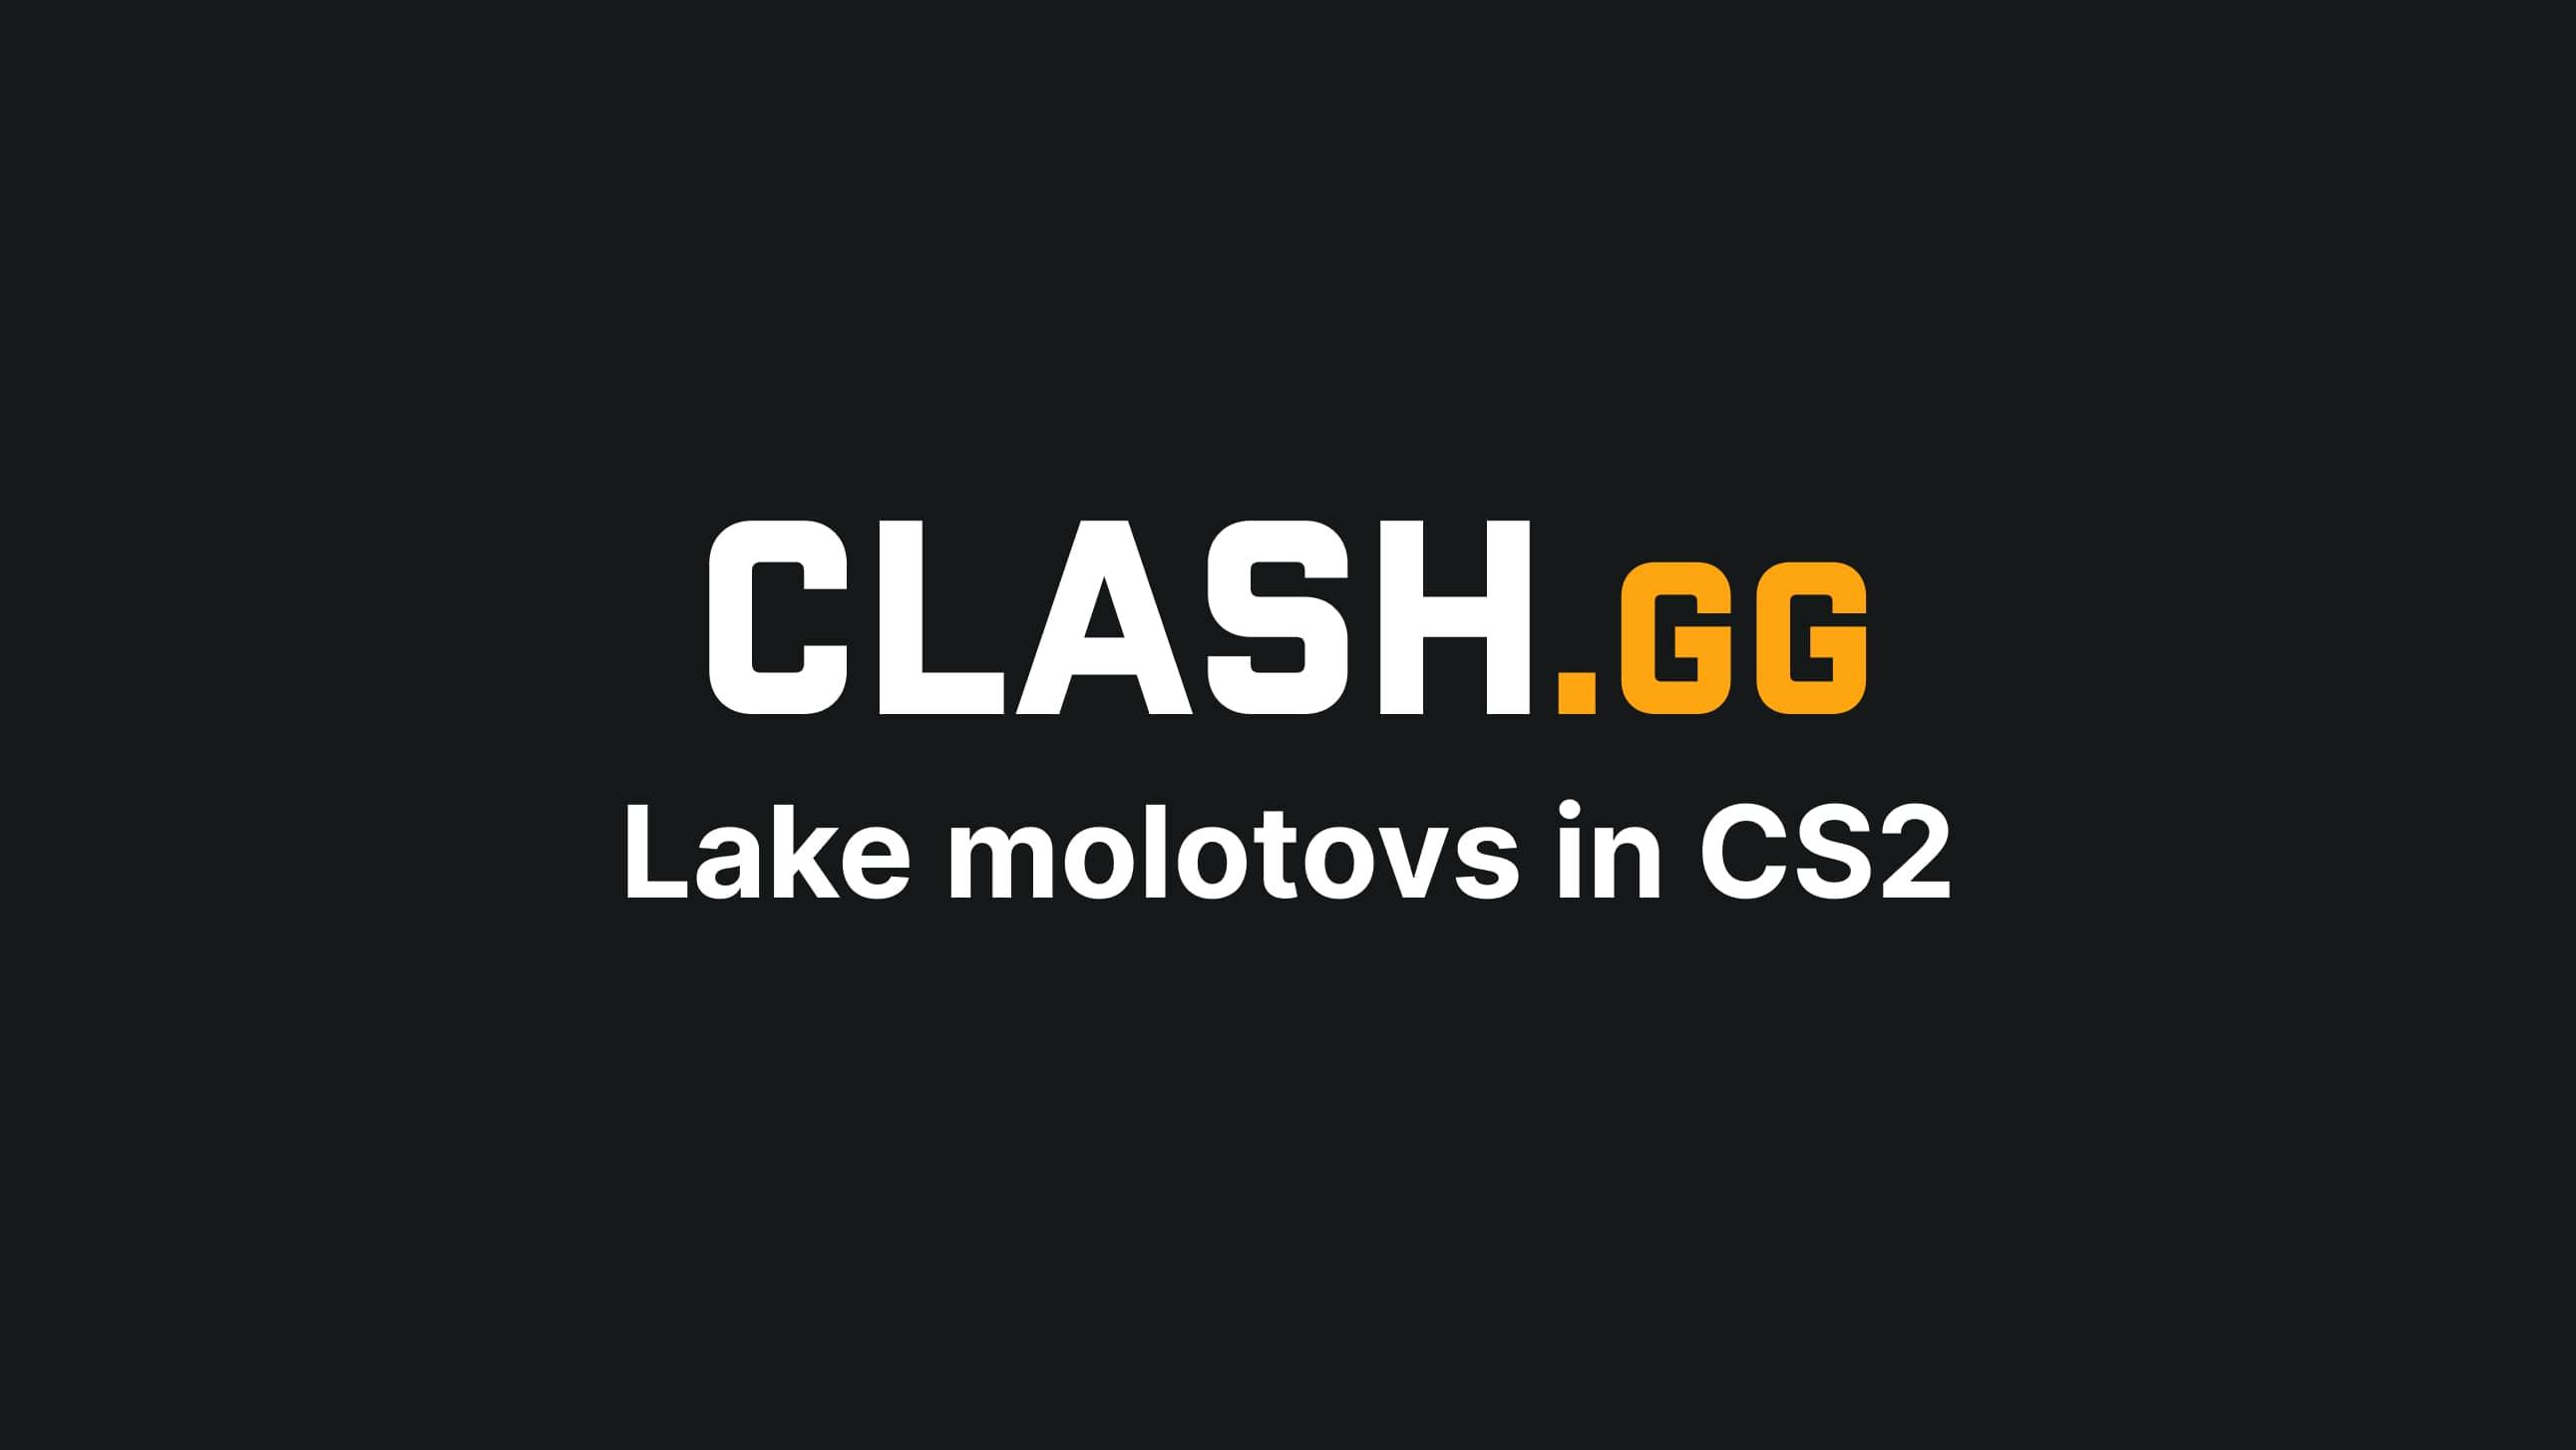 Lake molotovs in CS2 (CS:GO)